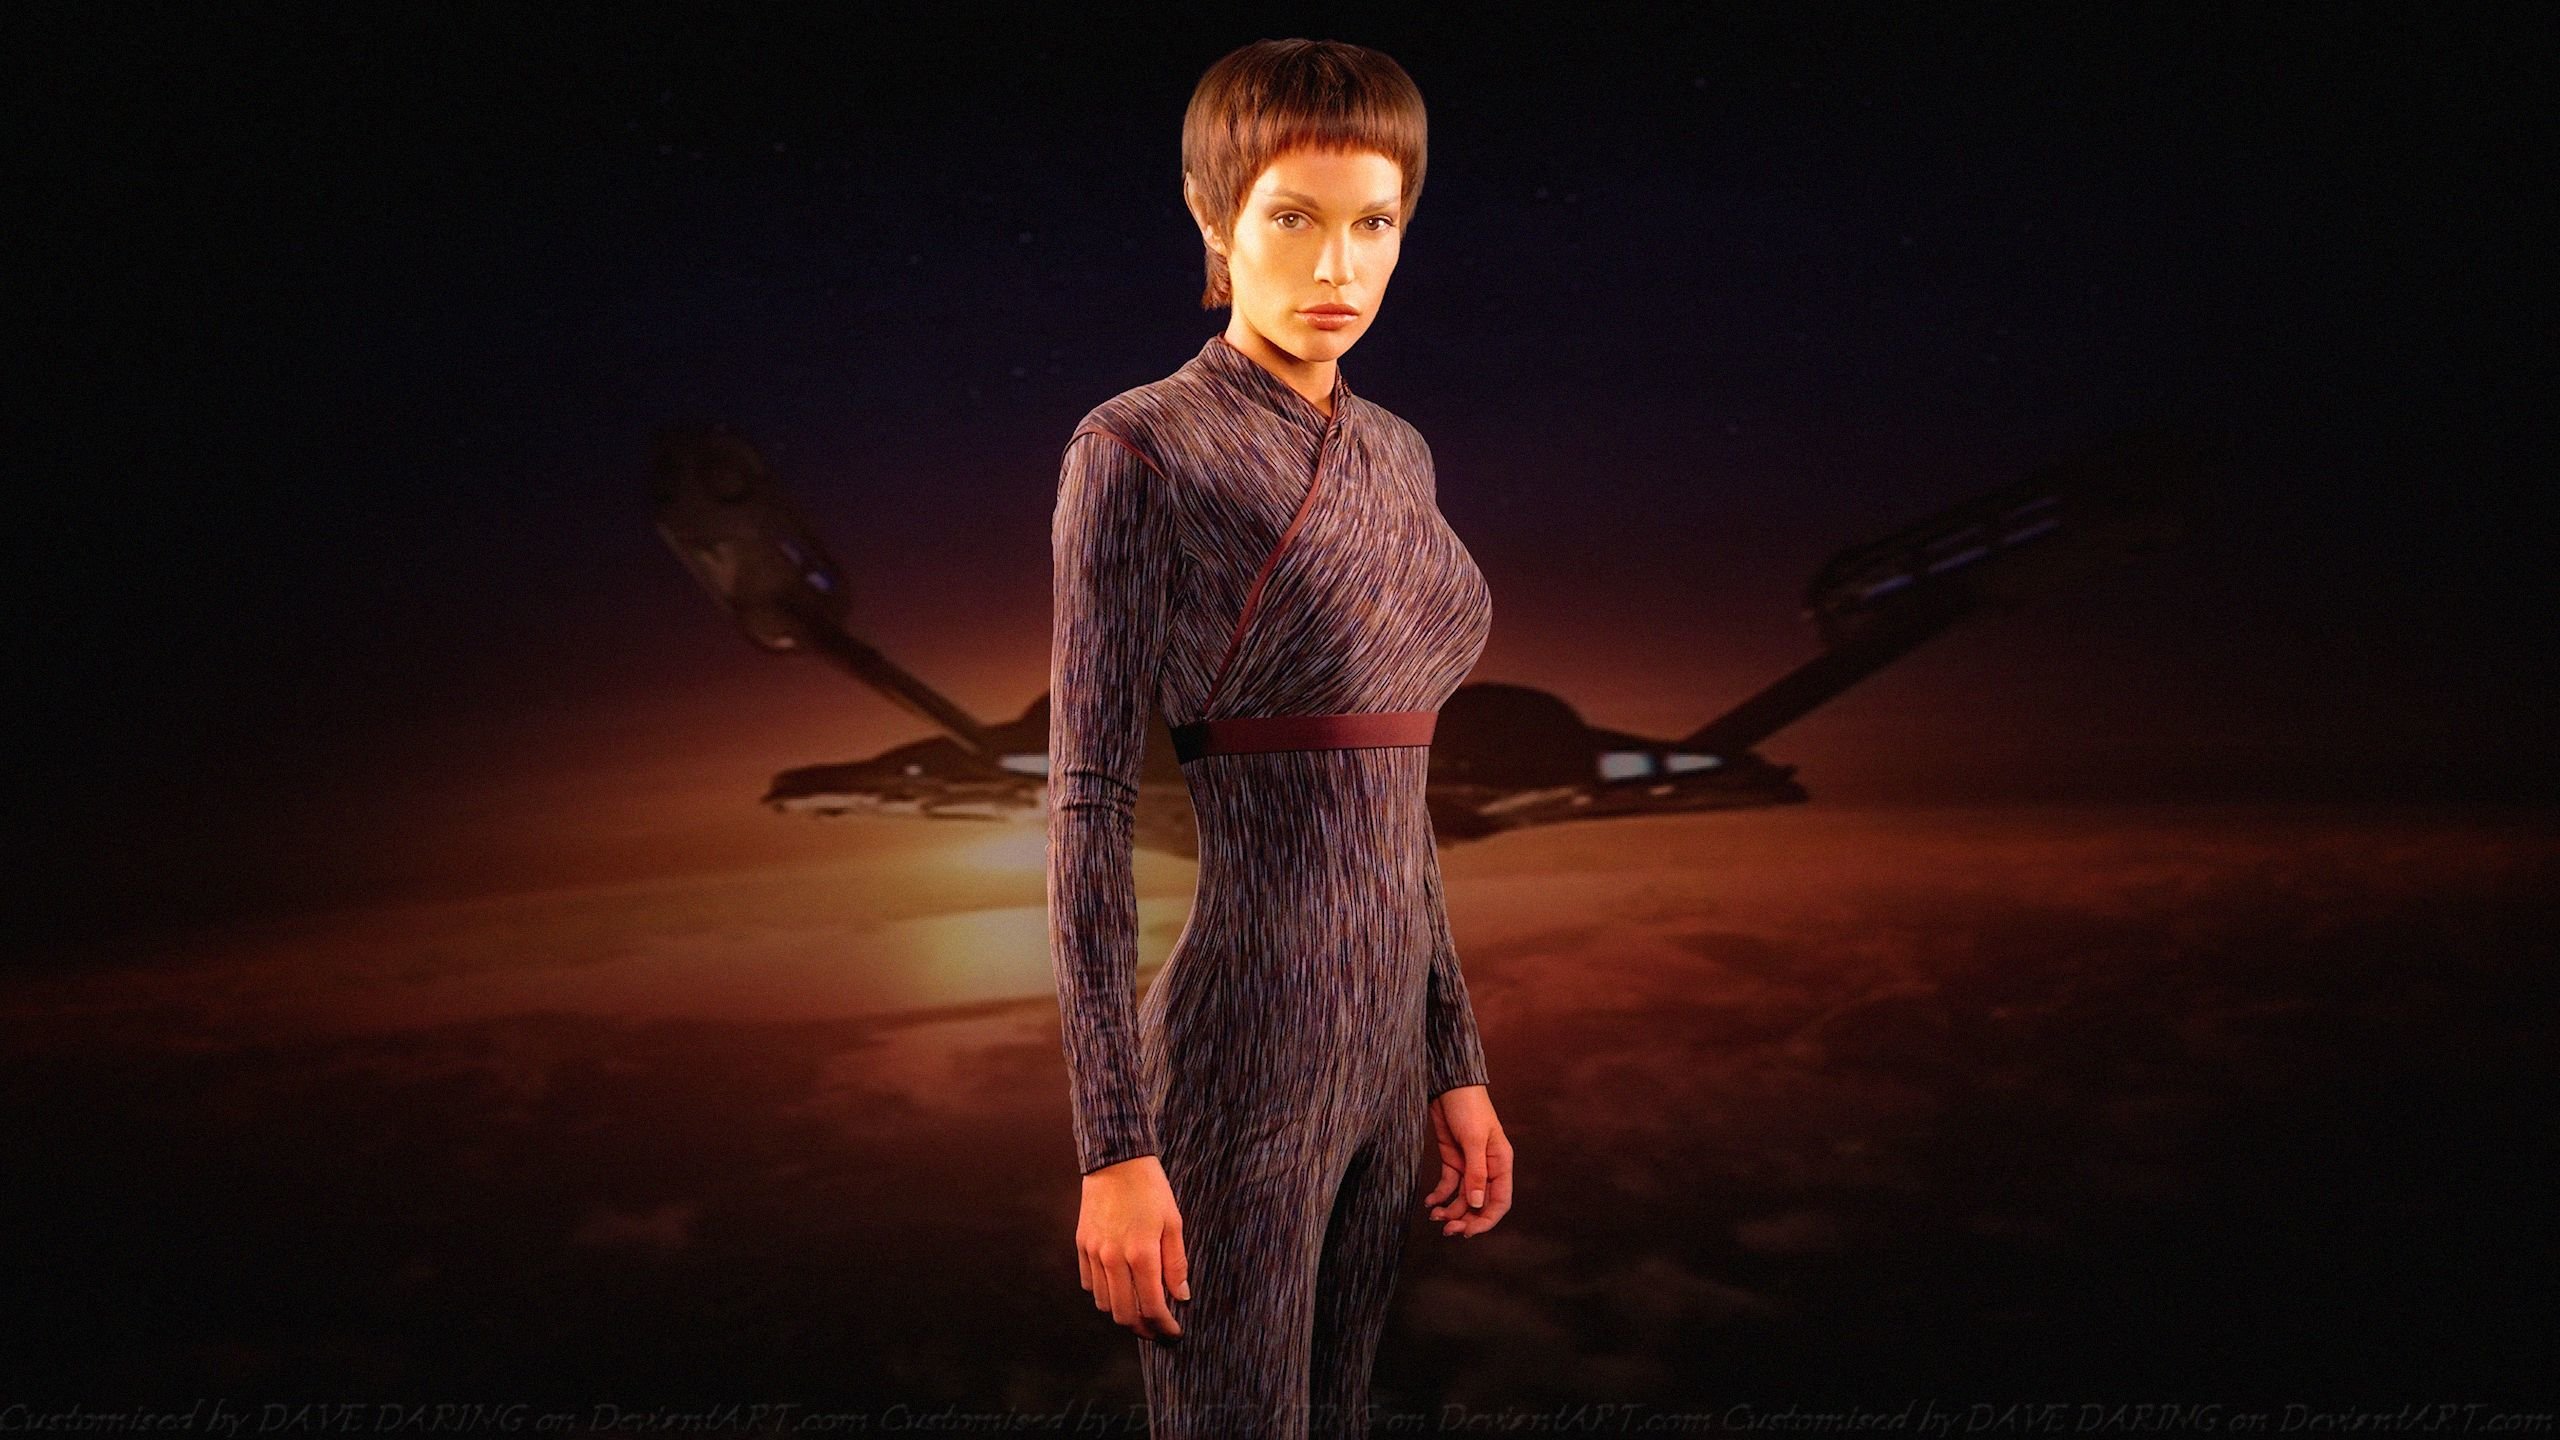 Free download Star Trek: Enterprise background ID:31267 hd 2560x1440 for PC